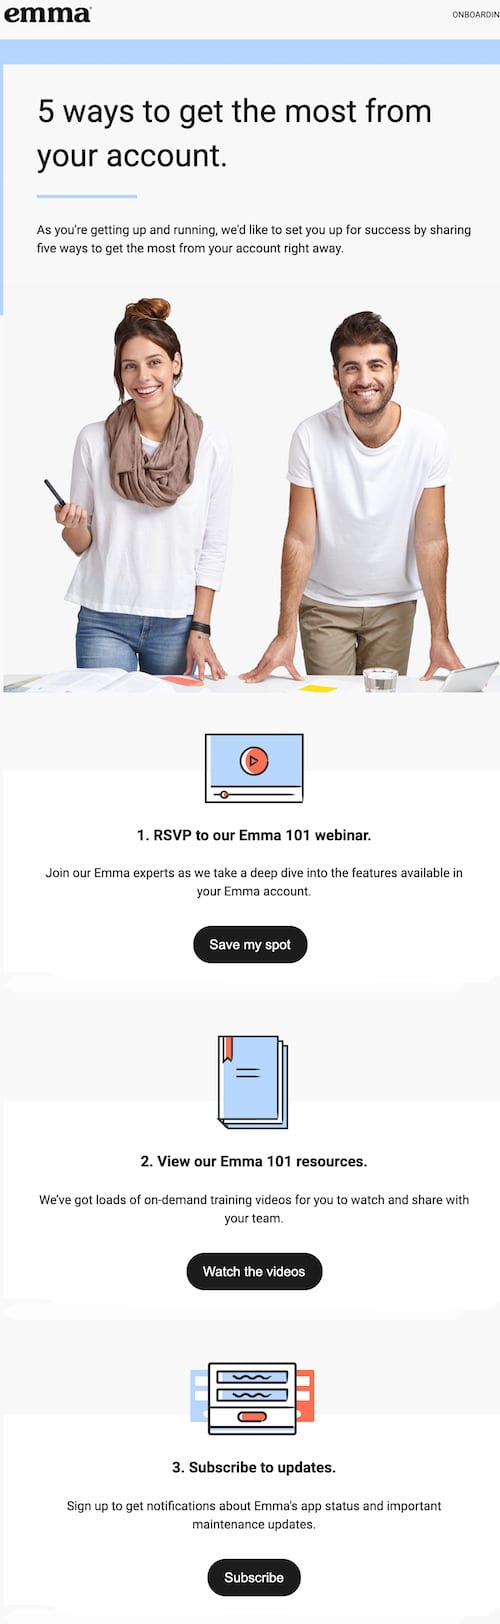 content-based-email-example：これはEmmaのコンテンツベースの自動メールの例です。